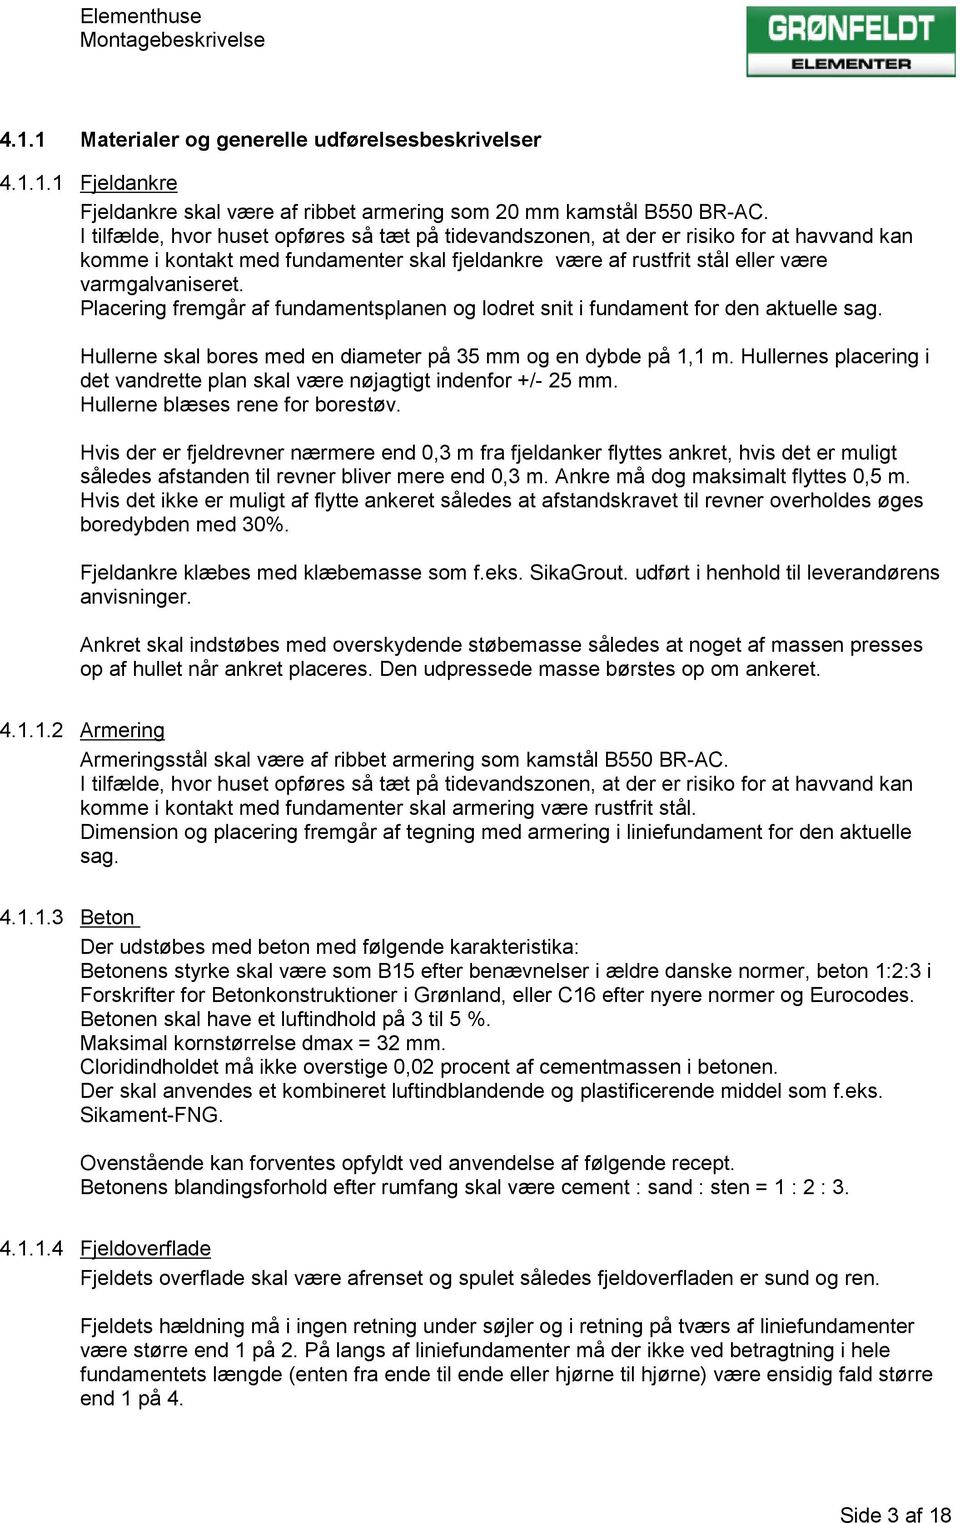 Grønfeldt Elementhuse Montagebeskrivelse - PDF Free Download